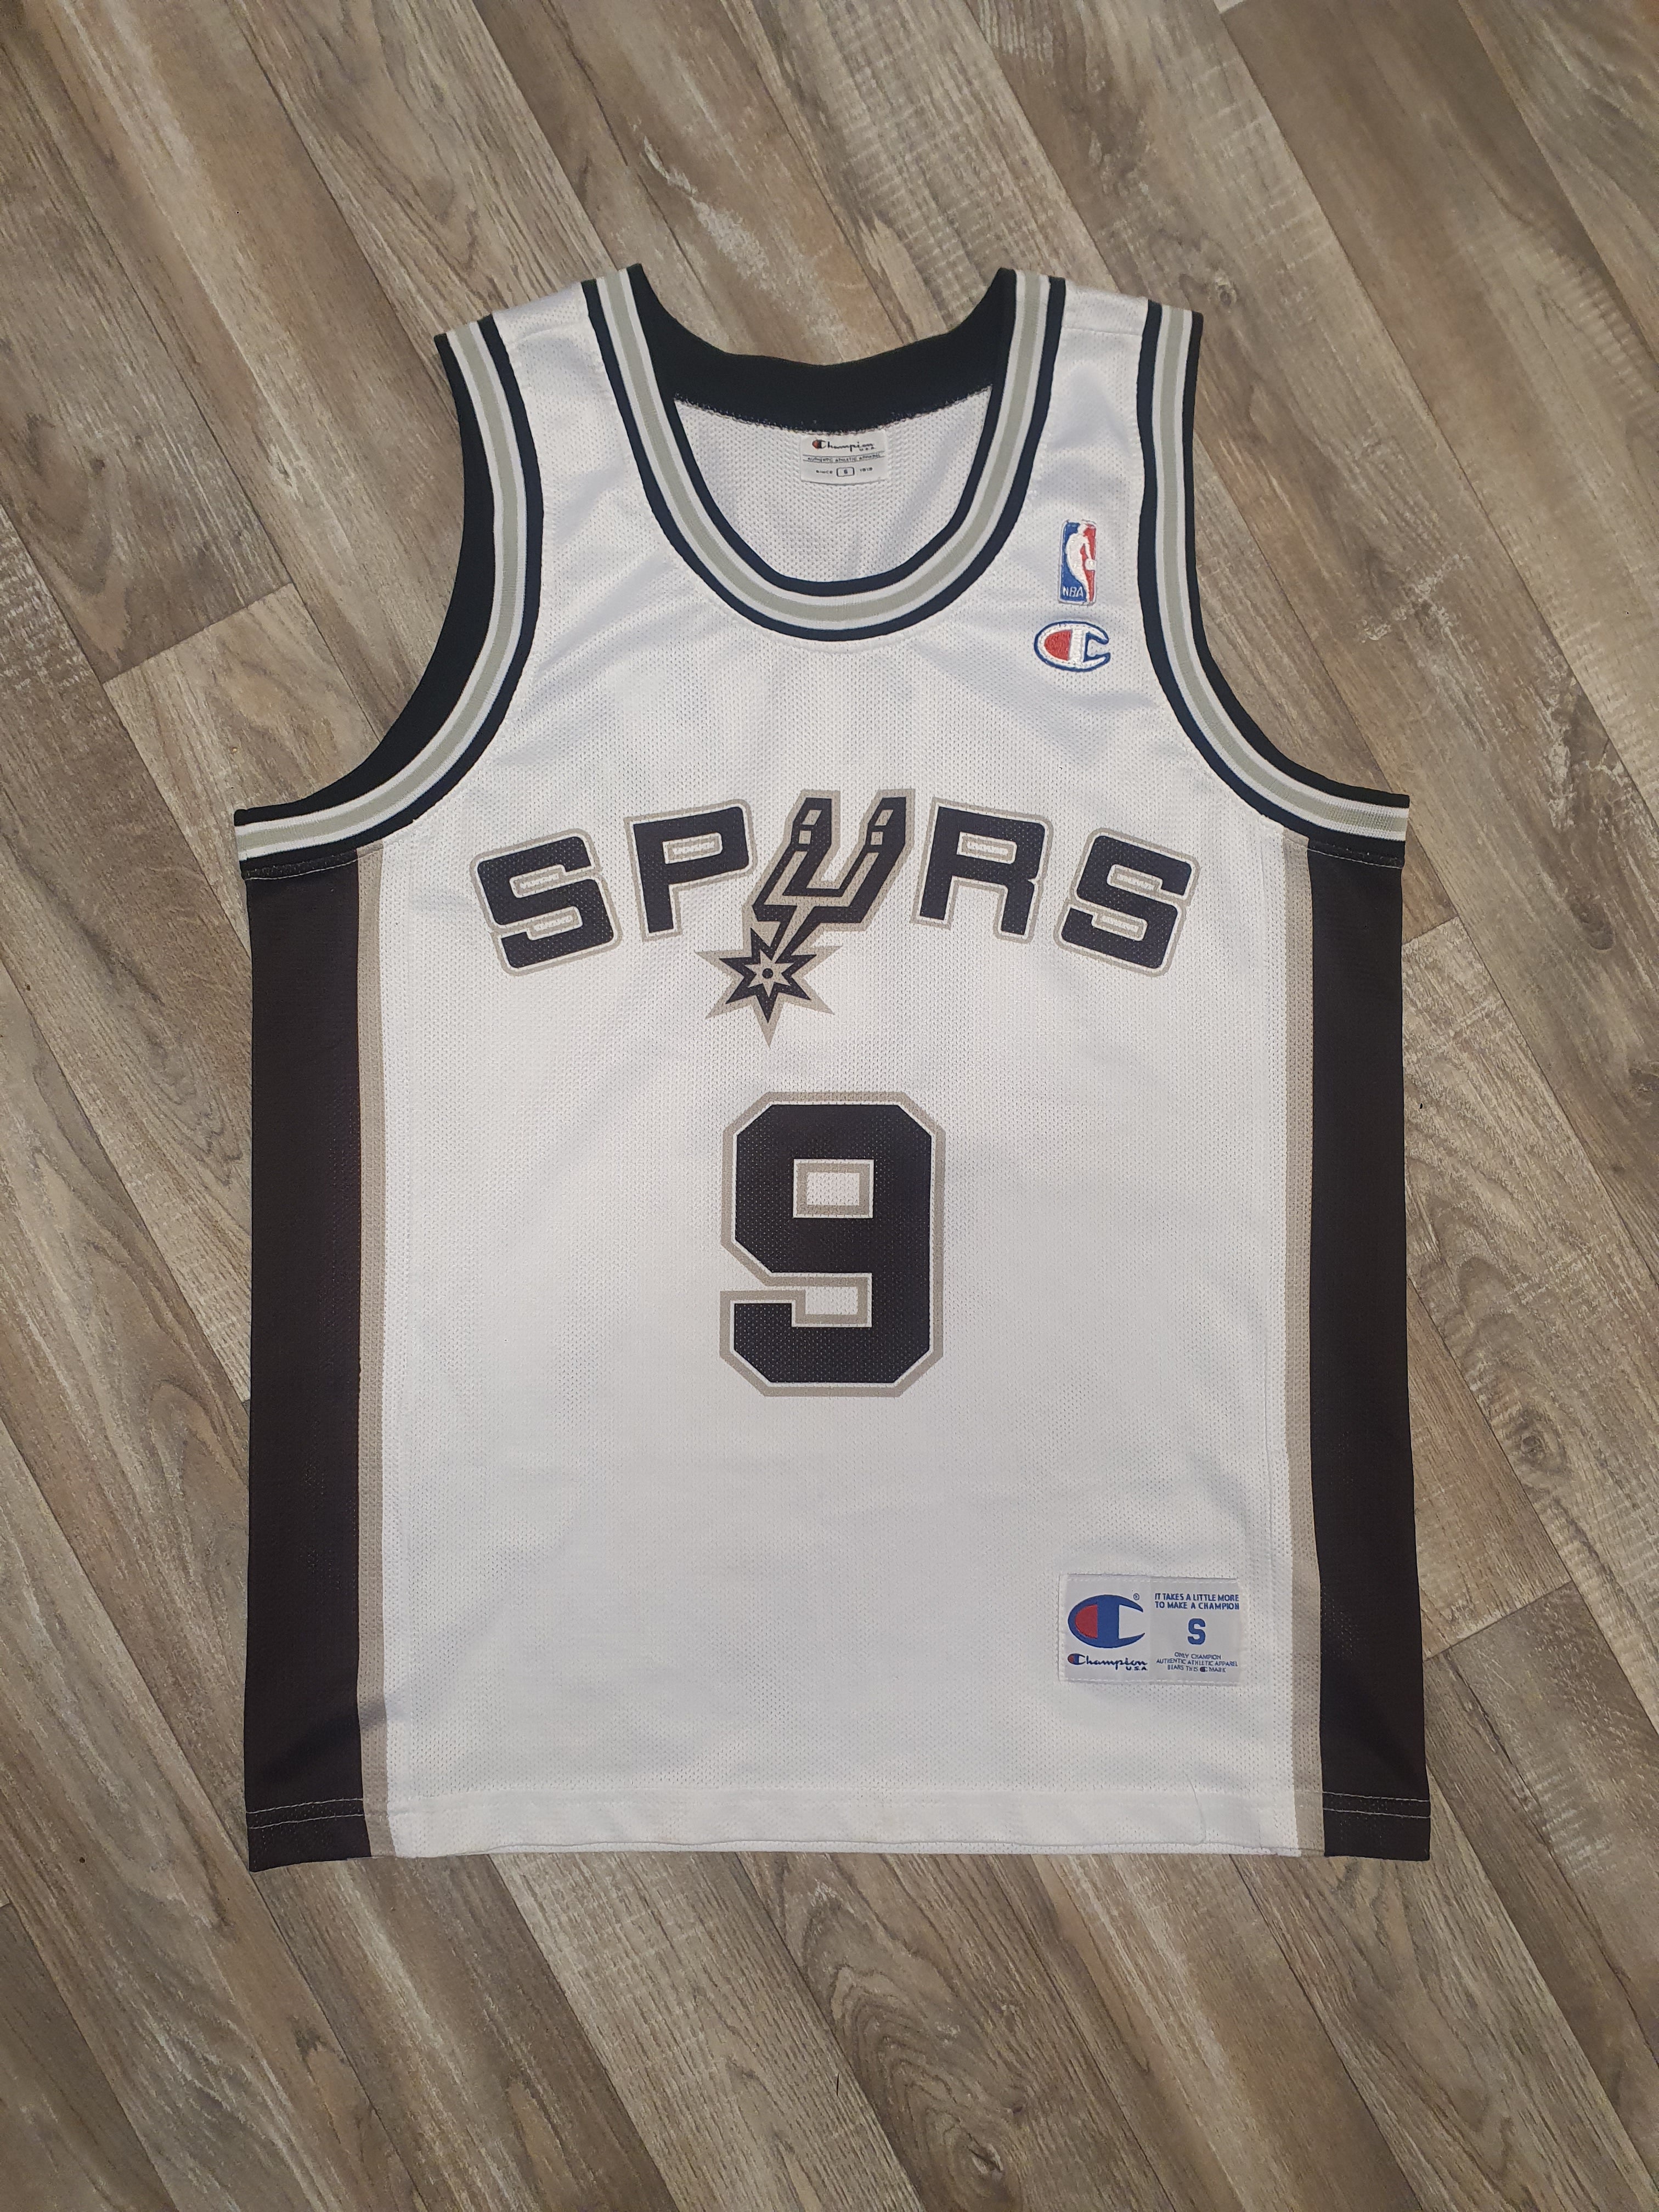 Champion San Antonio Spurs #9 Tony Parker NBA jersey size M MEDIUM